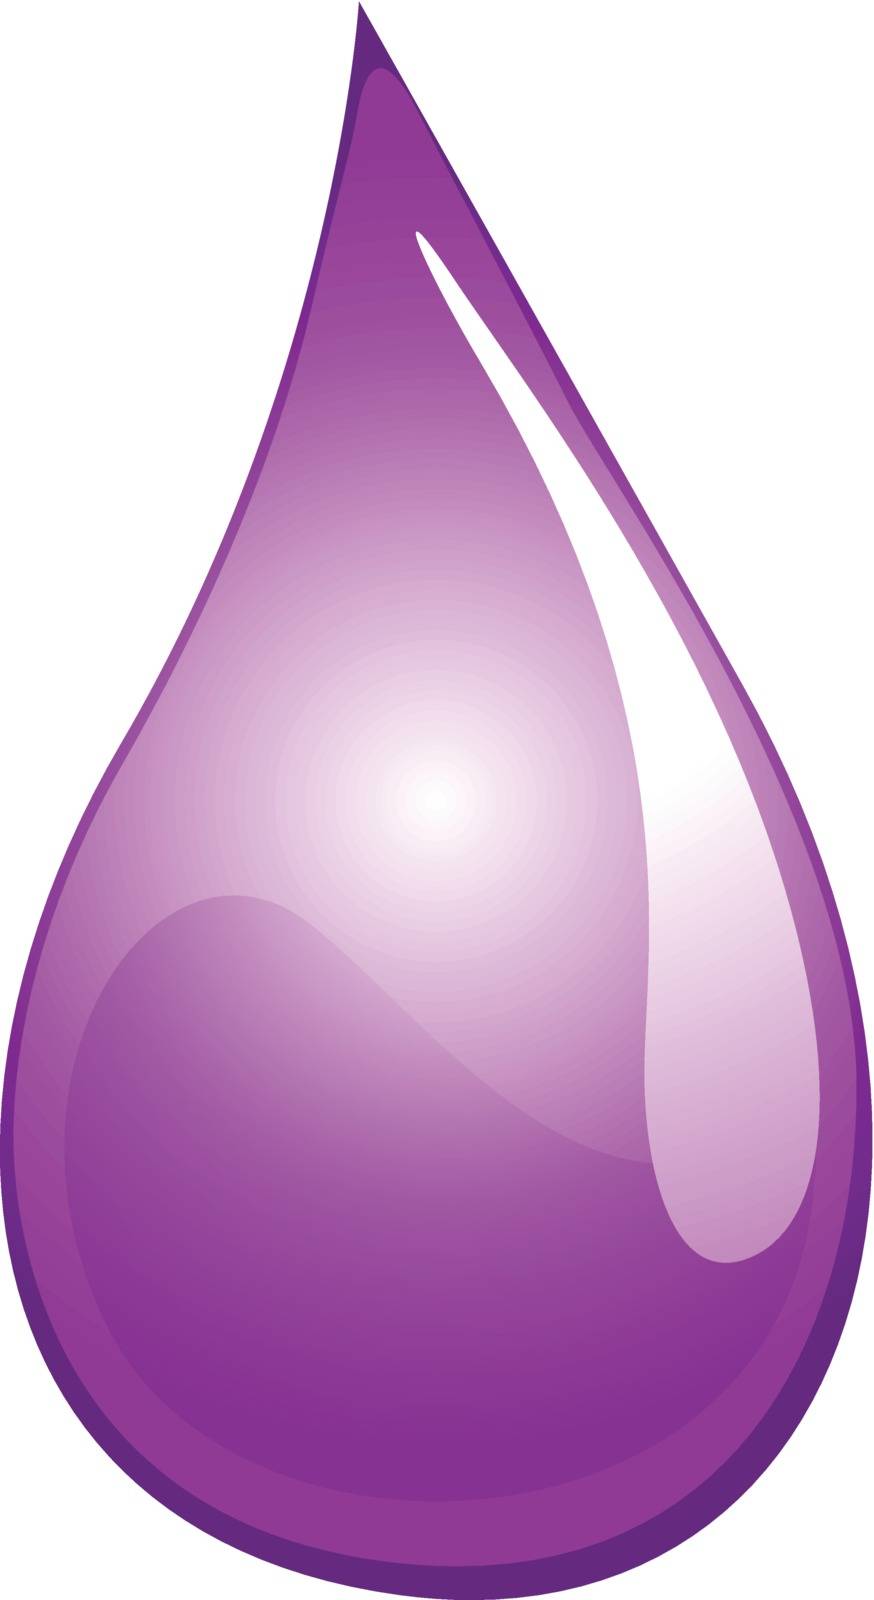 Illustration of a purple drop